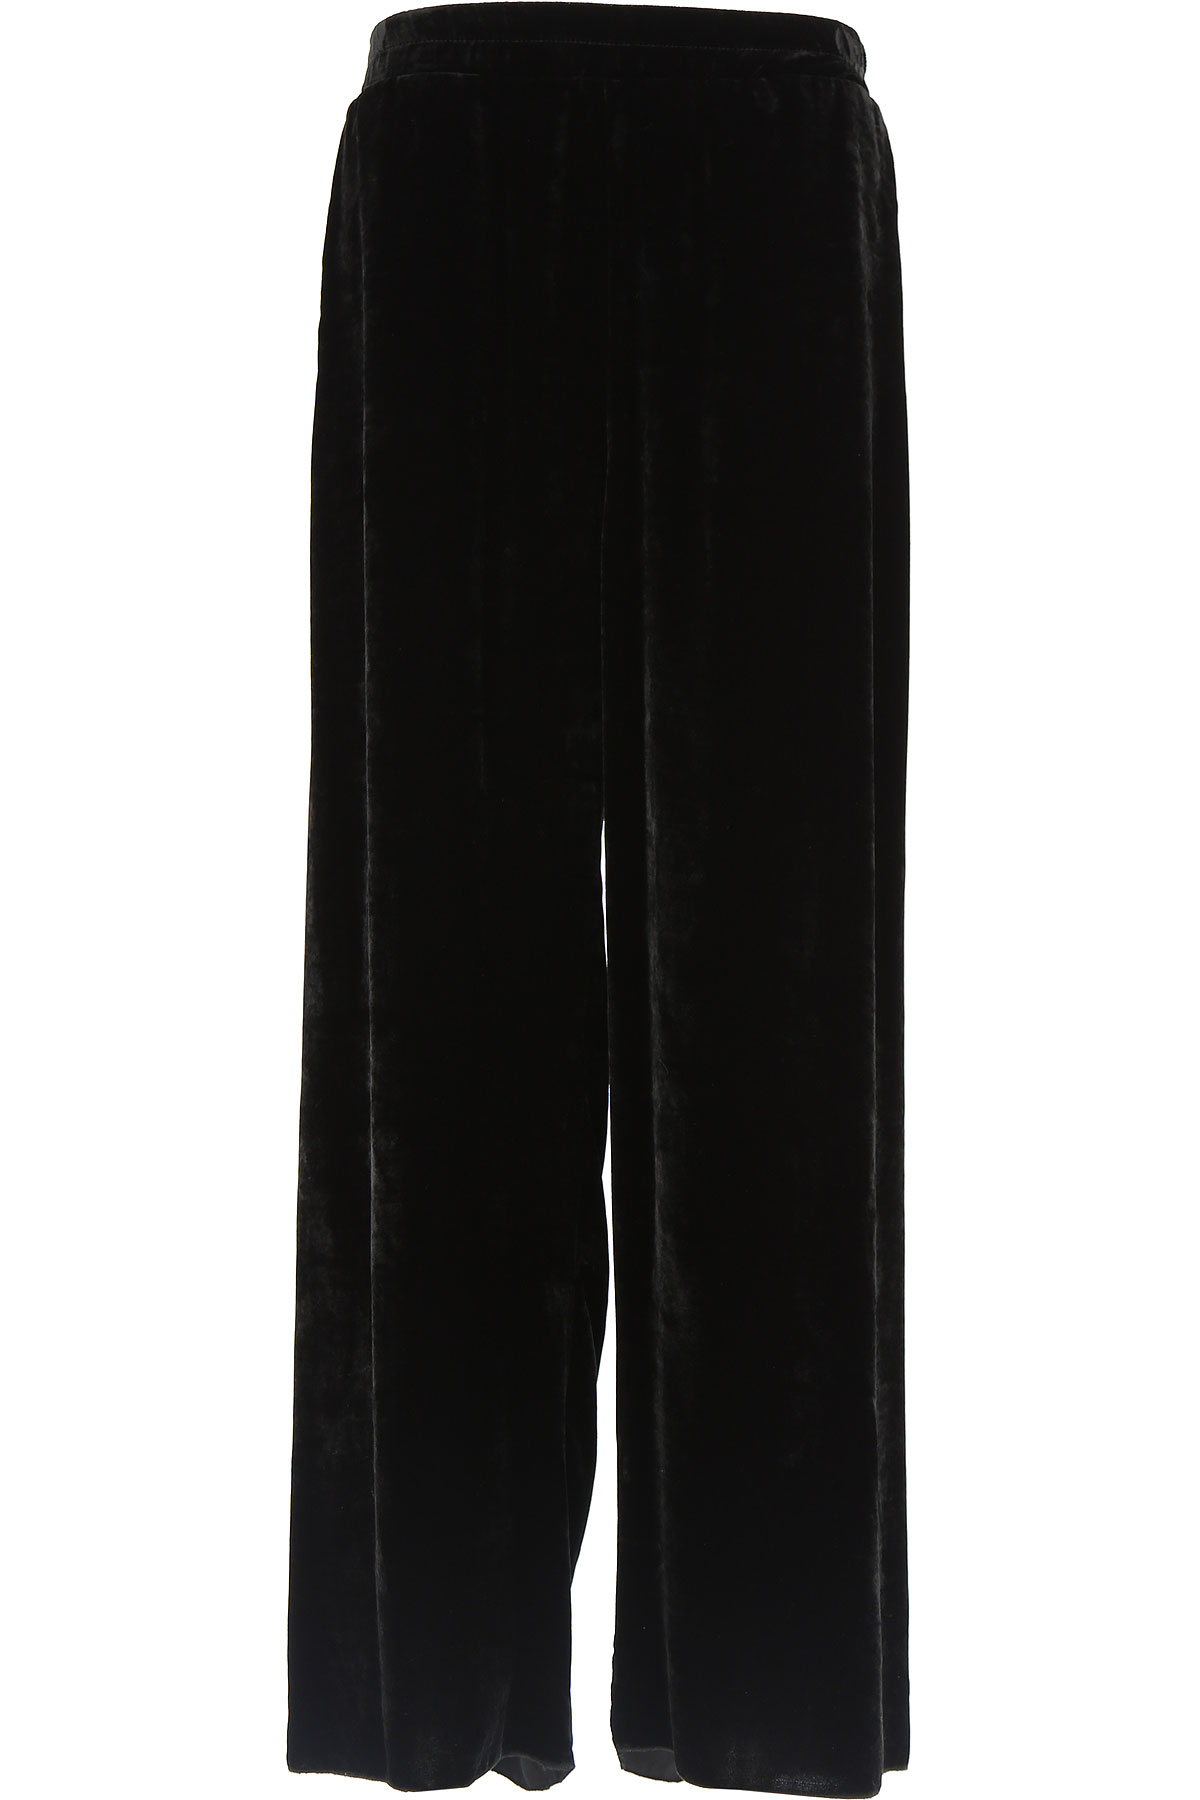 Trussardi Pantalon Femme , Noir, Viscose, 2017, 42 44